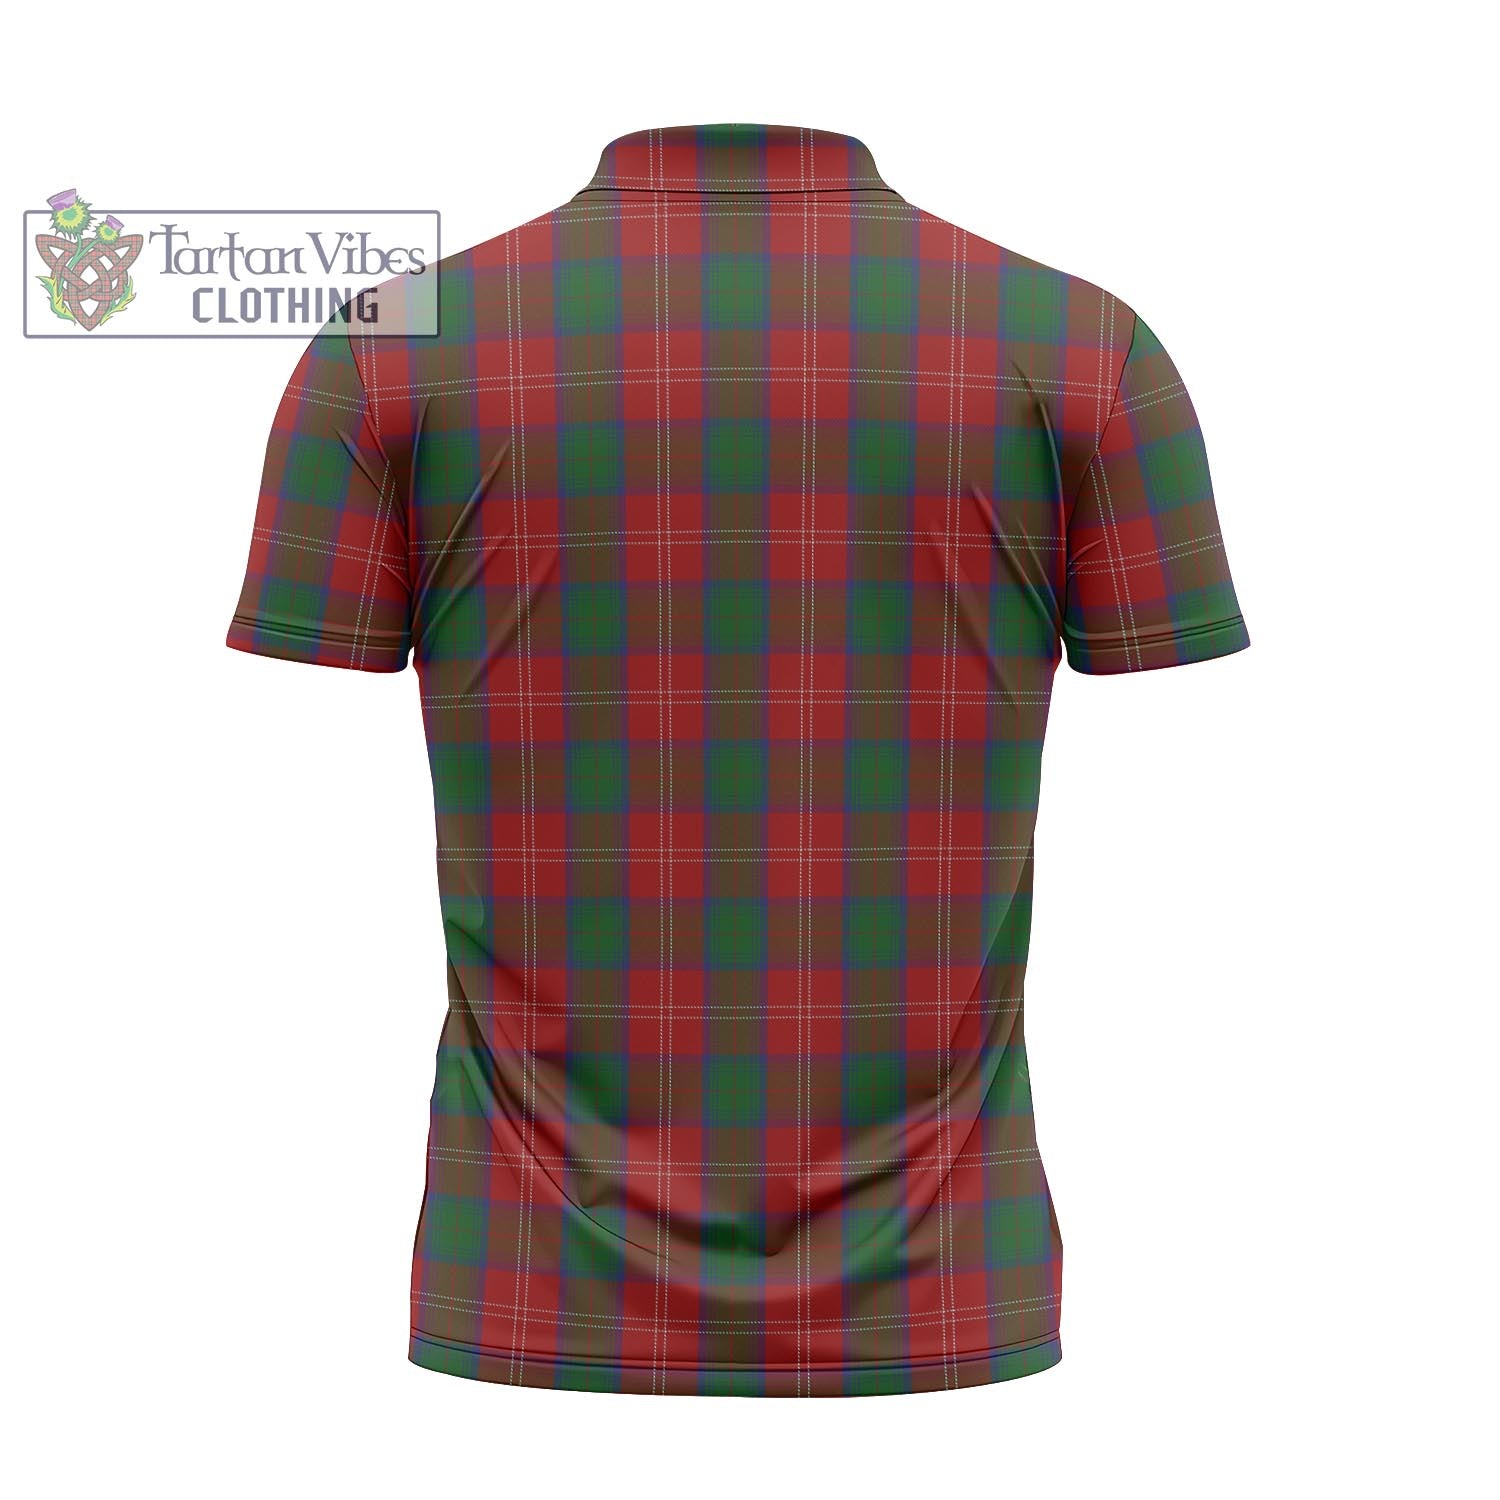 Tartan Vibes Clothing Chisholm Tartan Zipper Polo Shirt with Family Crest